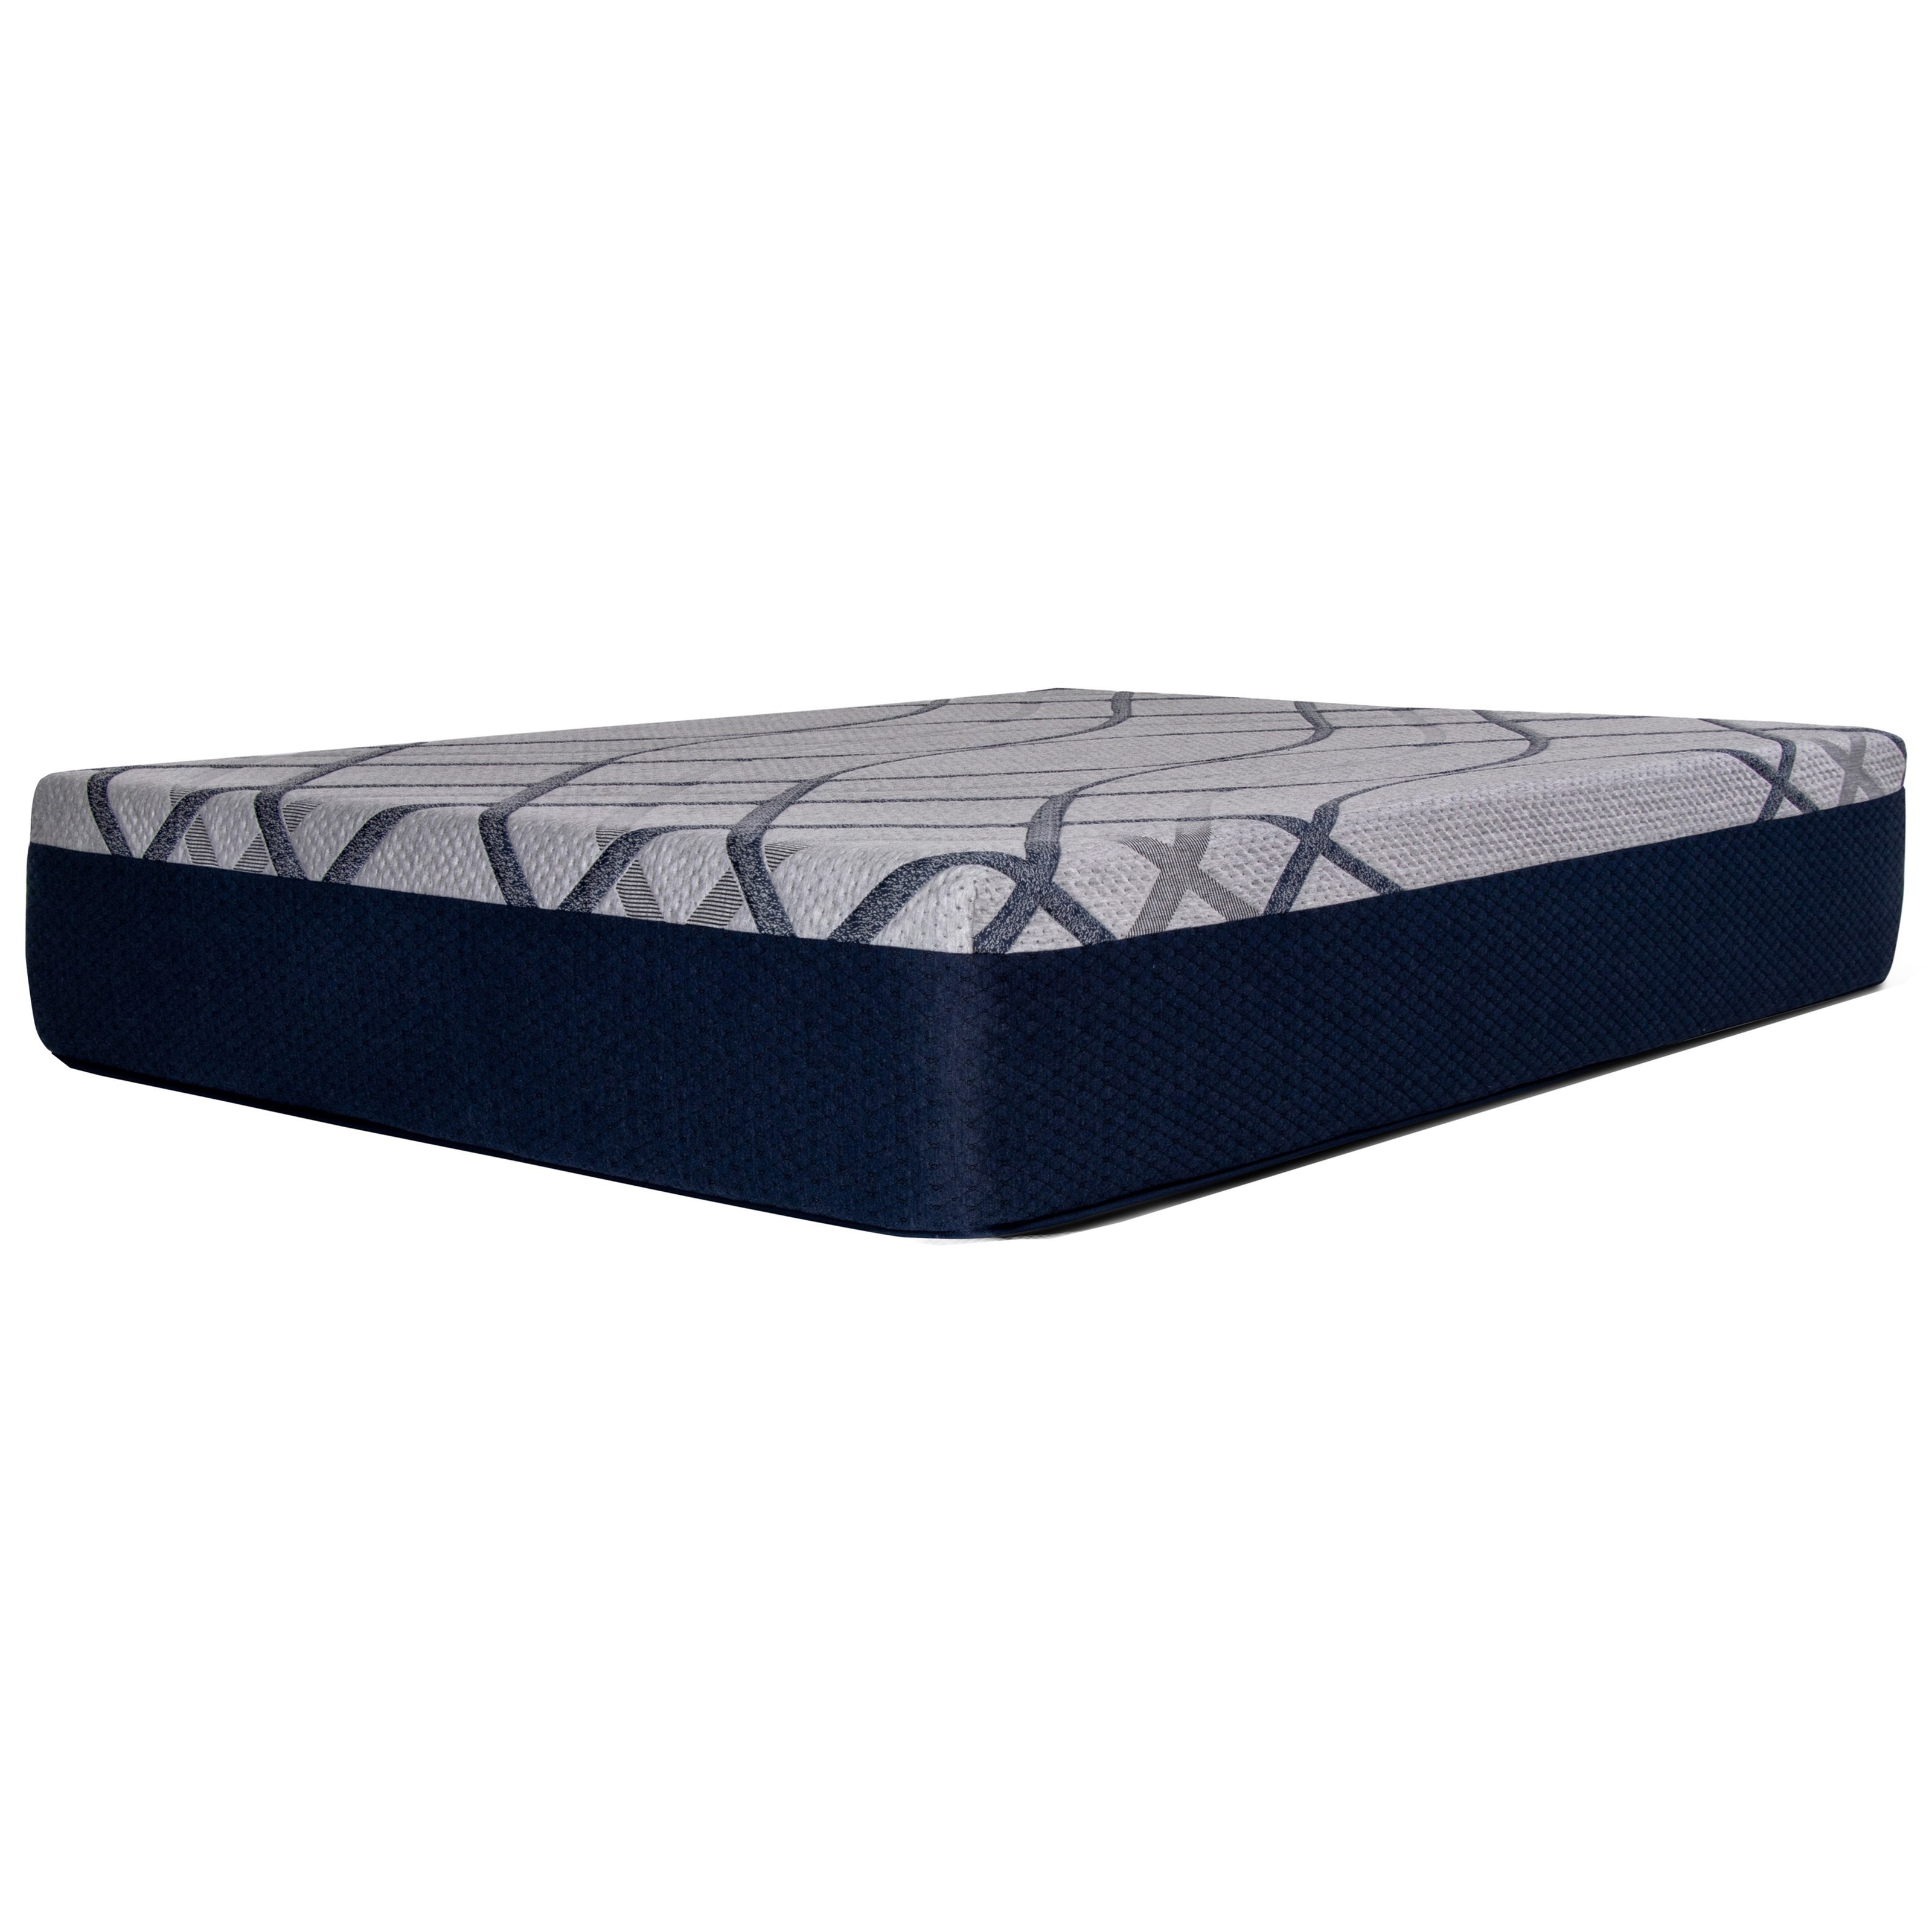 Twin Best Price Mattress 8 Memory Foam Mattress and 14 Premium Steel Bed Frame/Foundation Set